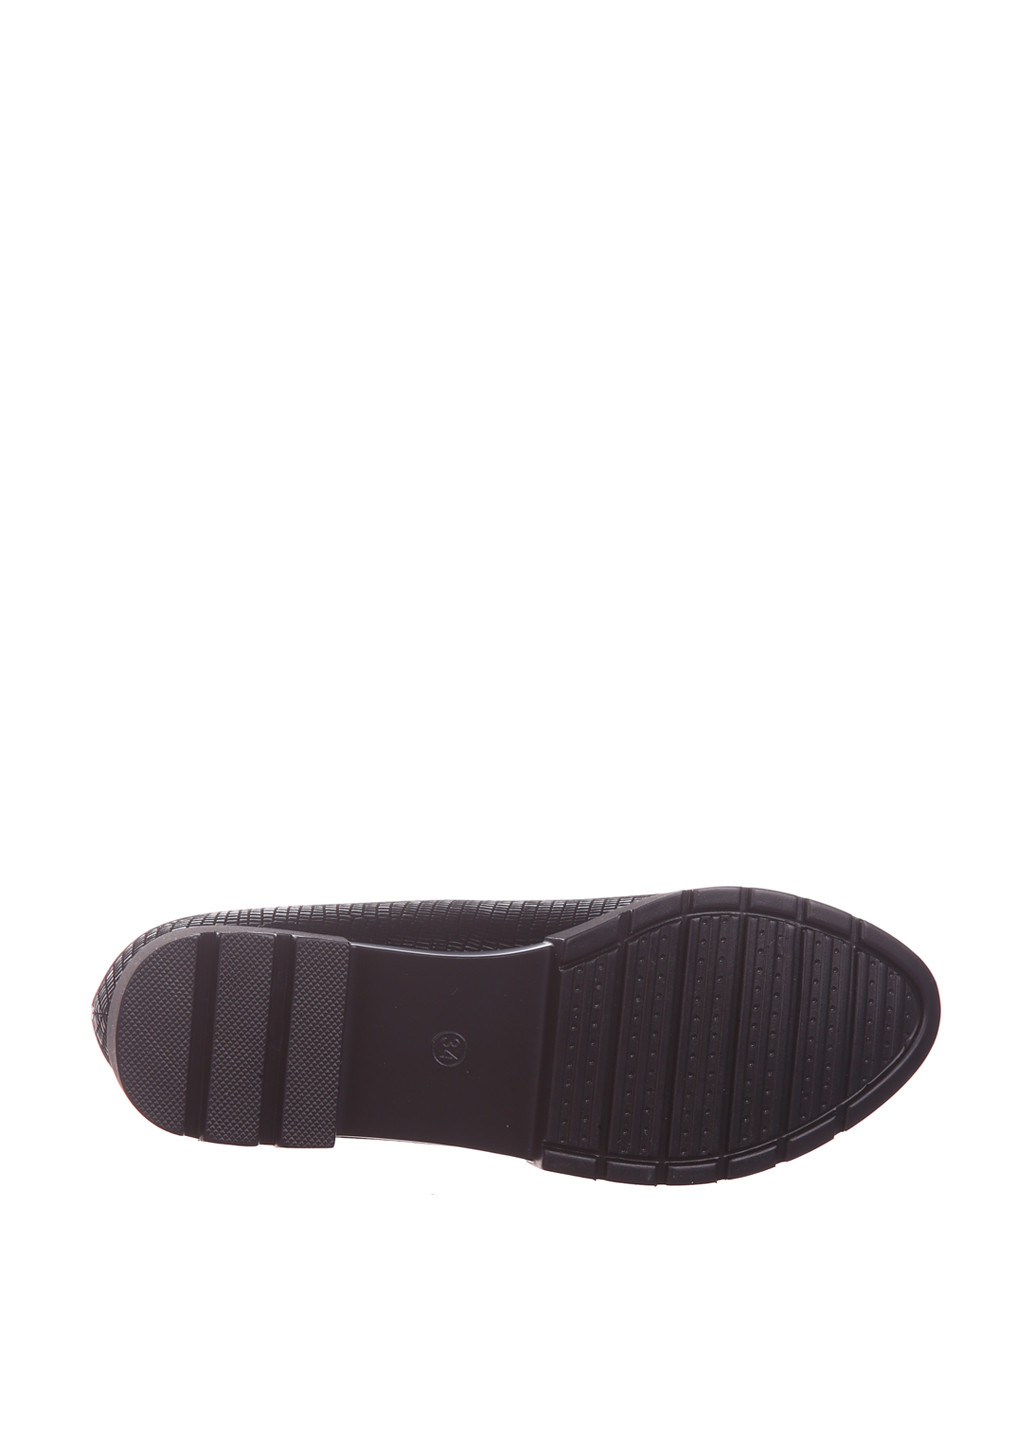 Черные туфли на низком каблуке Kimbo-O